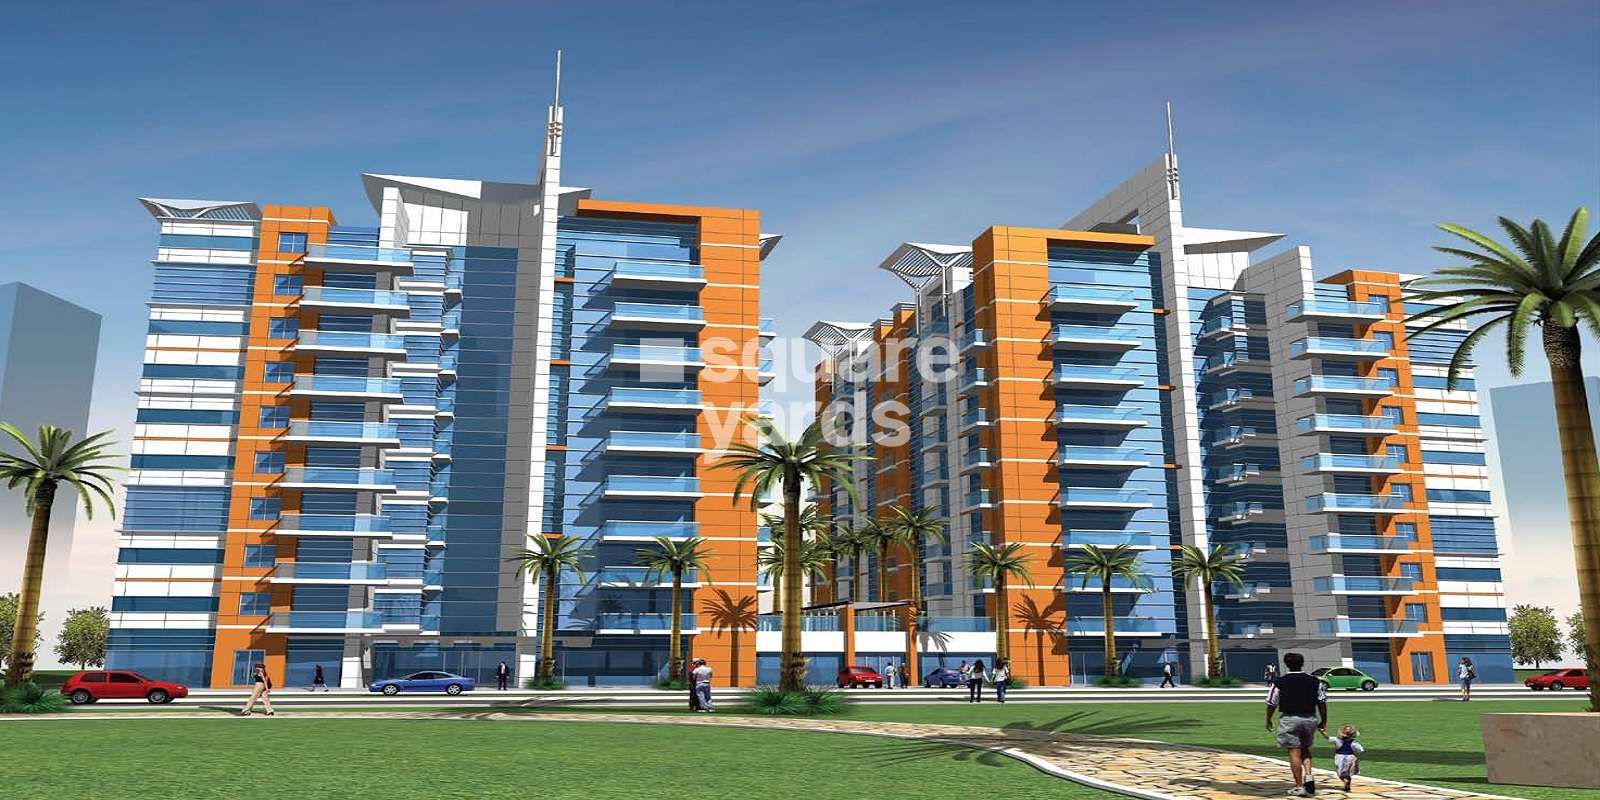 Durar Apartments Cover Image